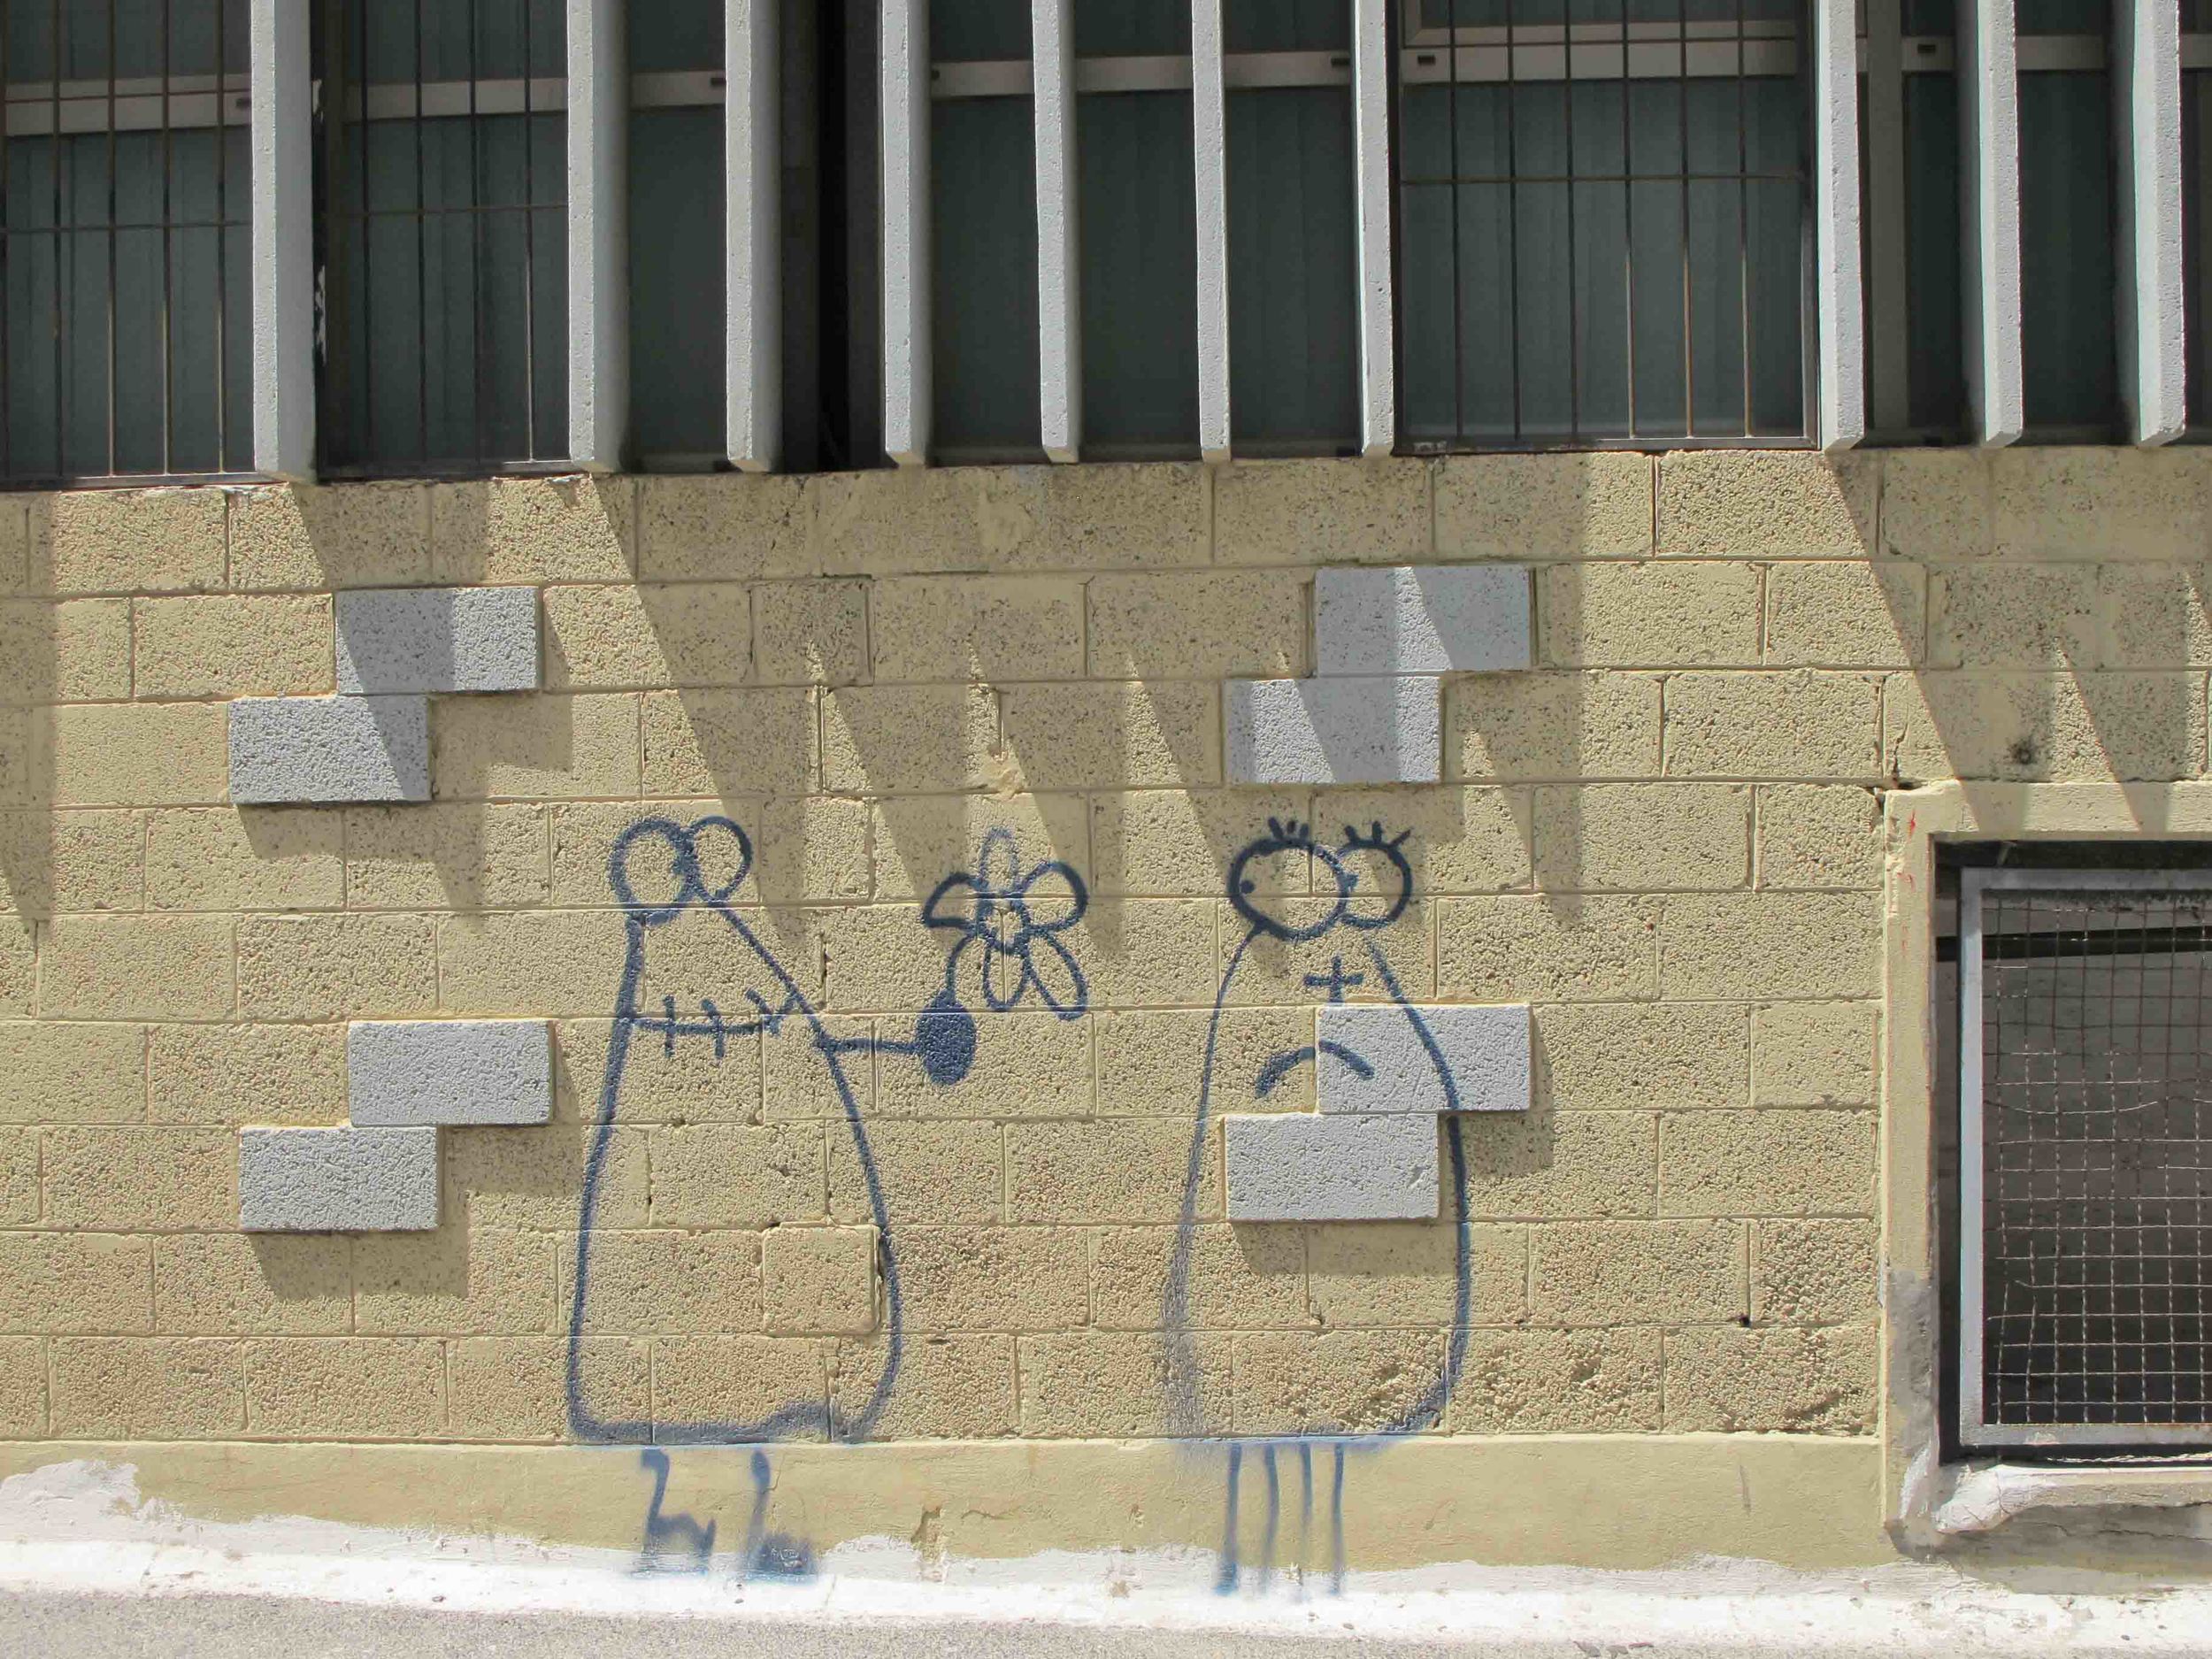 GRAFFITI AND STREET ART IN TEL AVIV